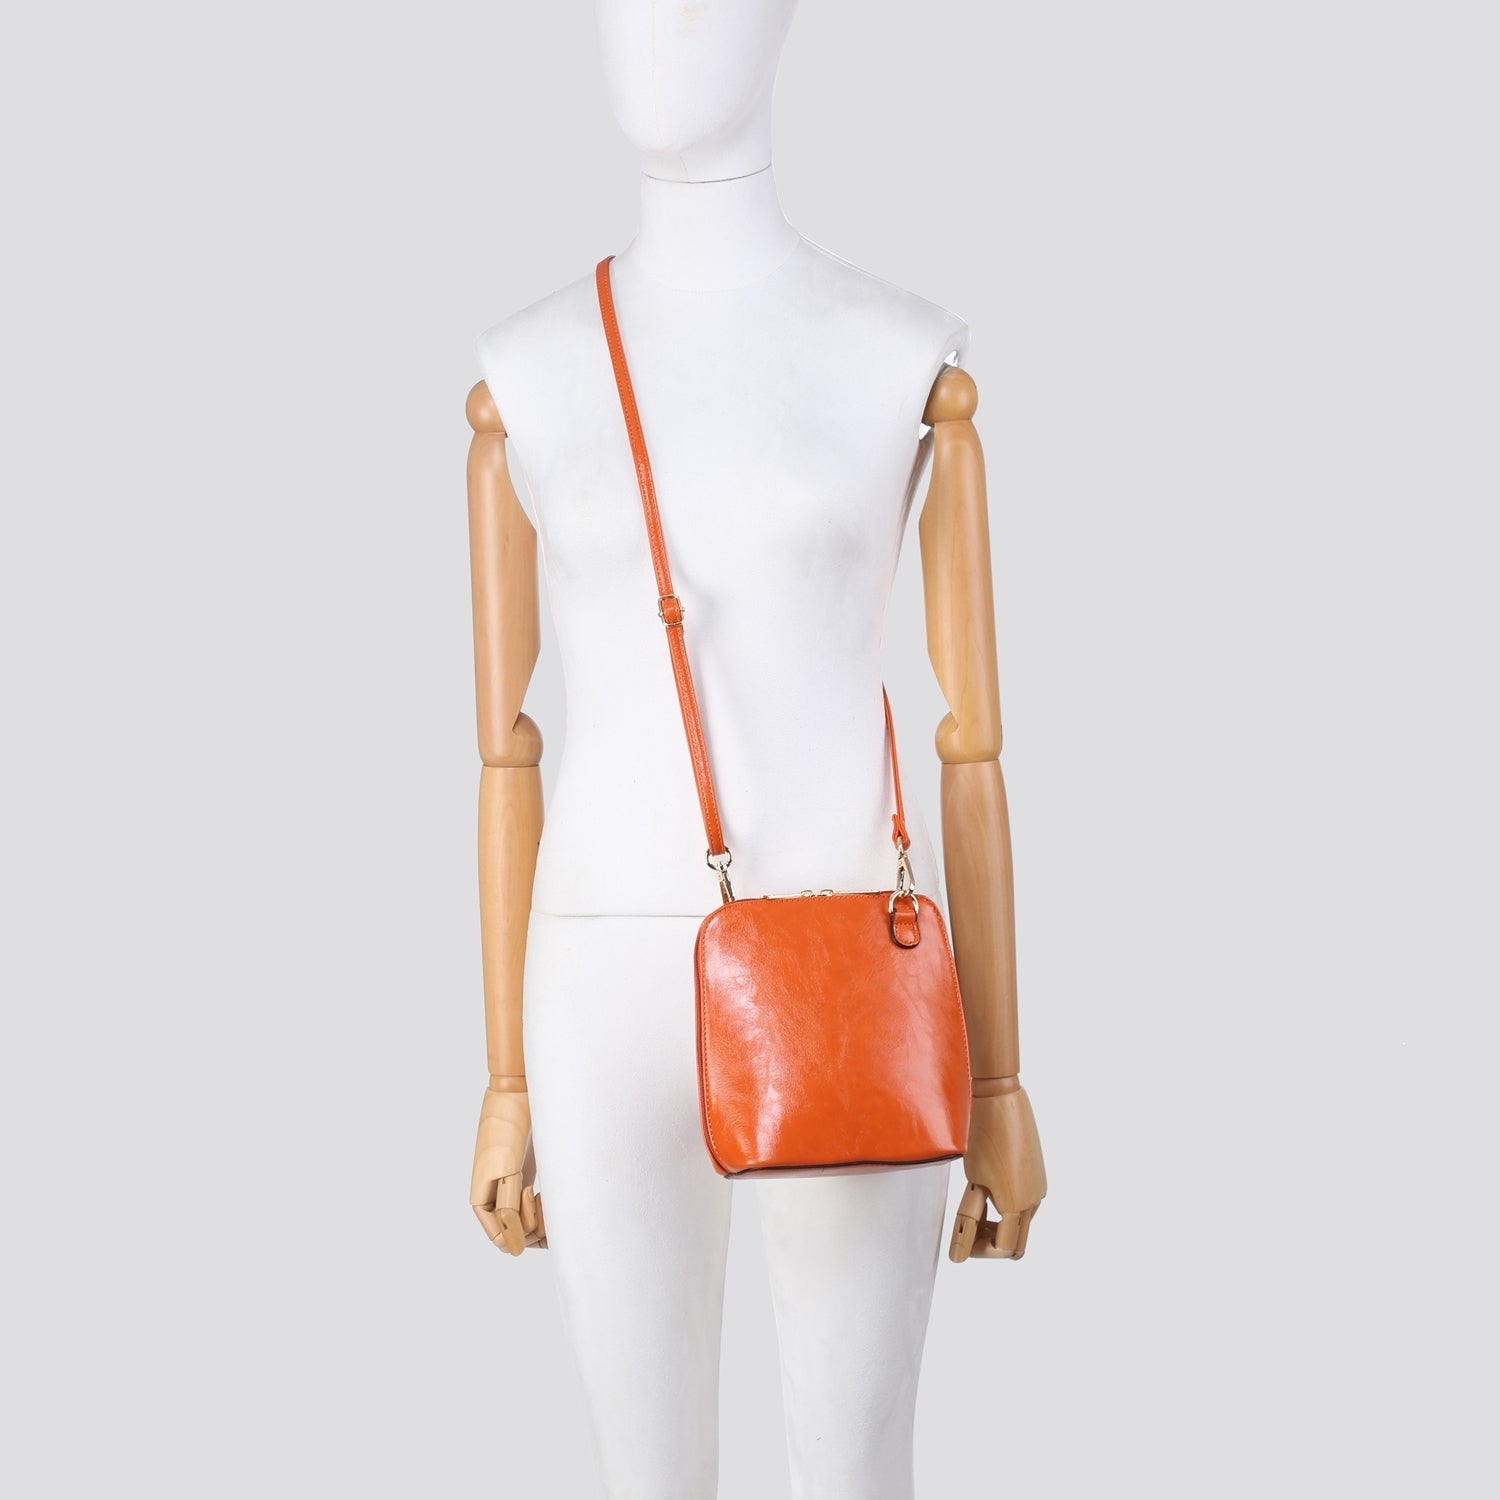 Womens Shoulder Cross Body Bag Faux Leather Messenger Bags